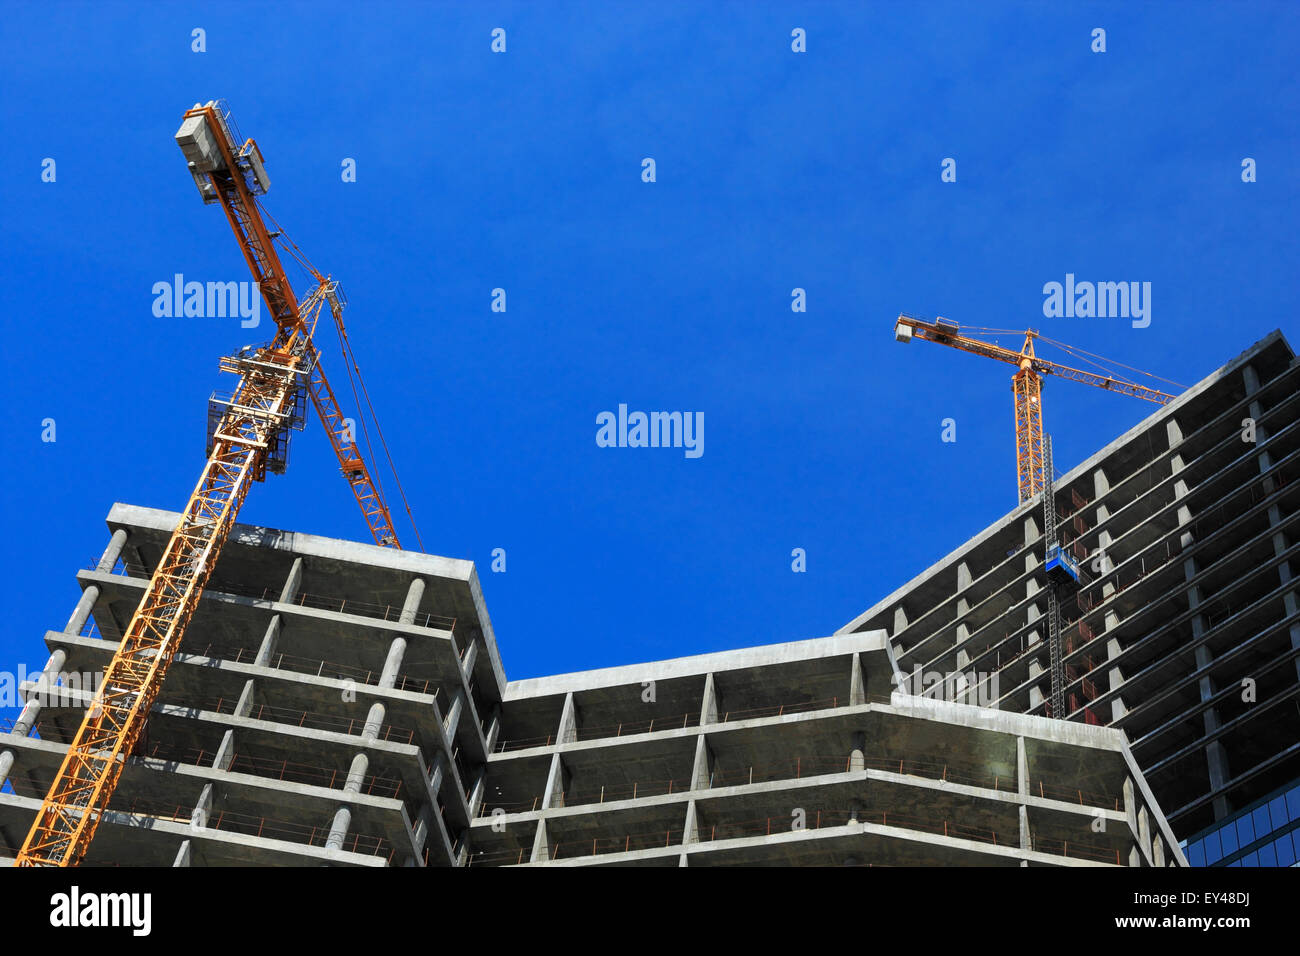 Construction of reinforced steel & concrete buildings. Stock Photo